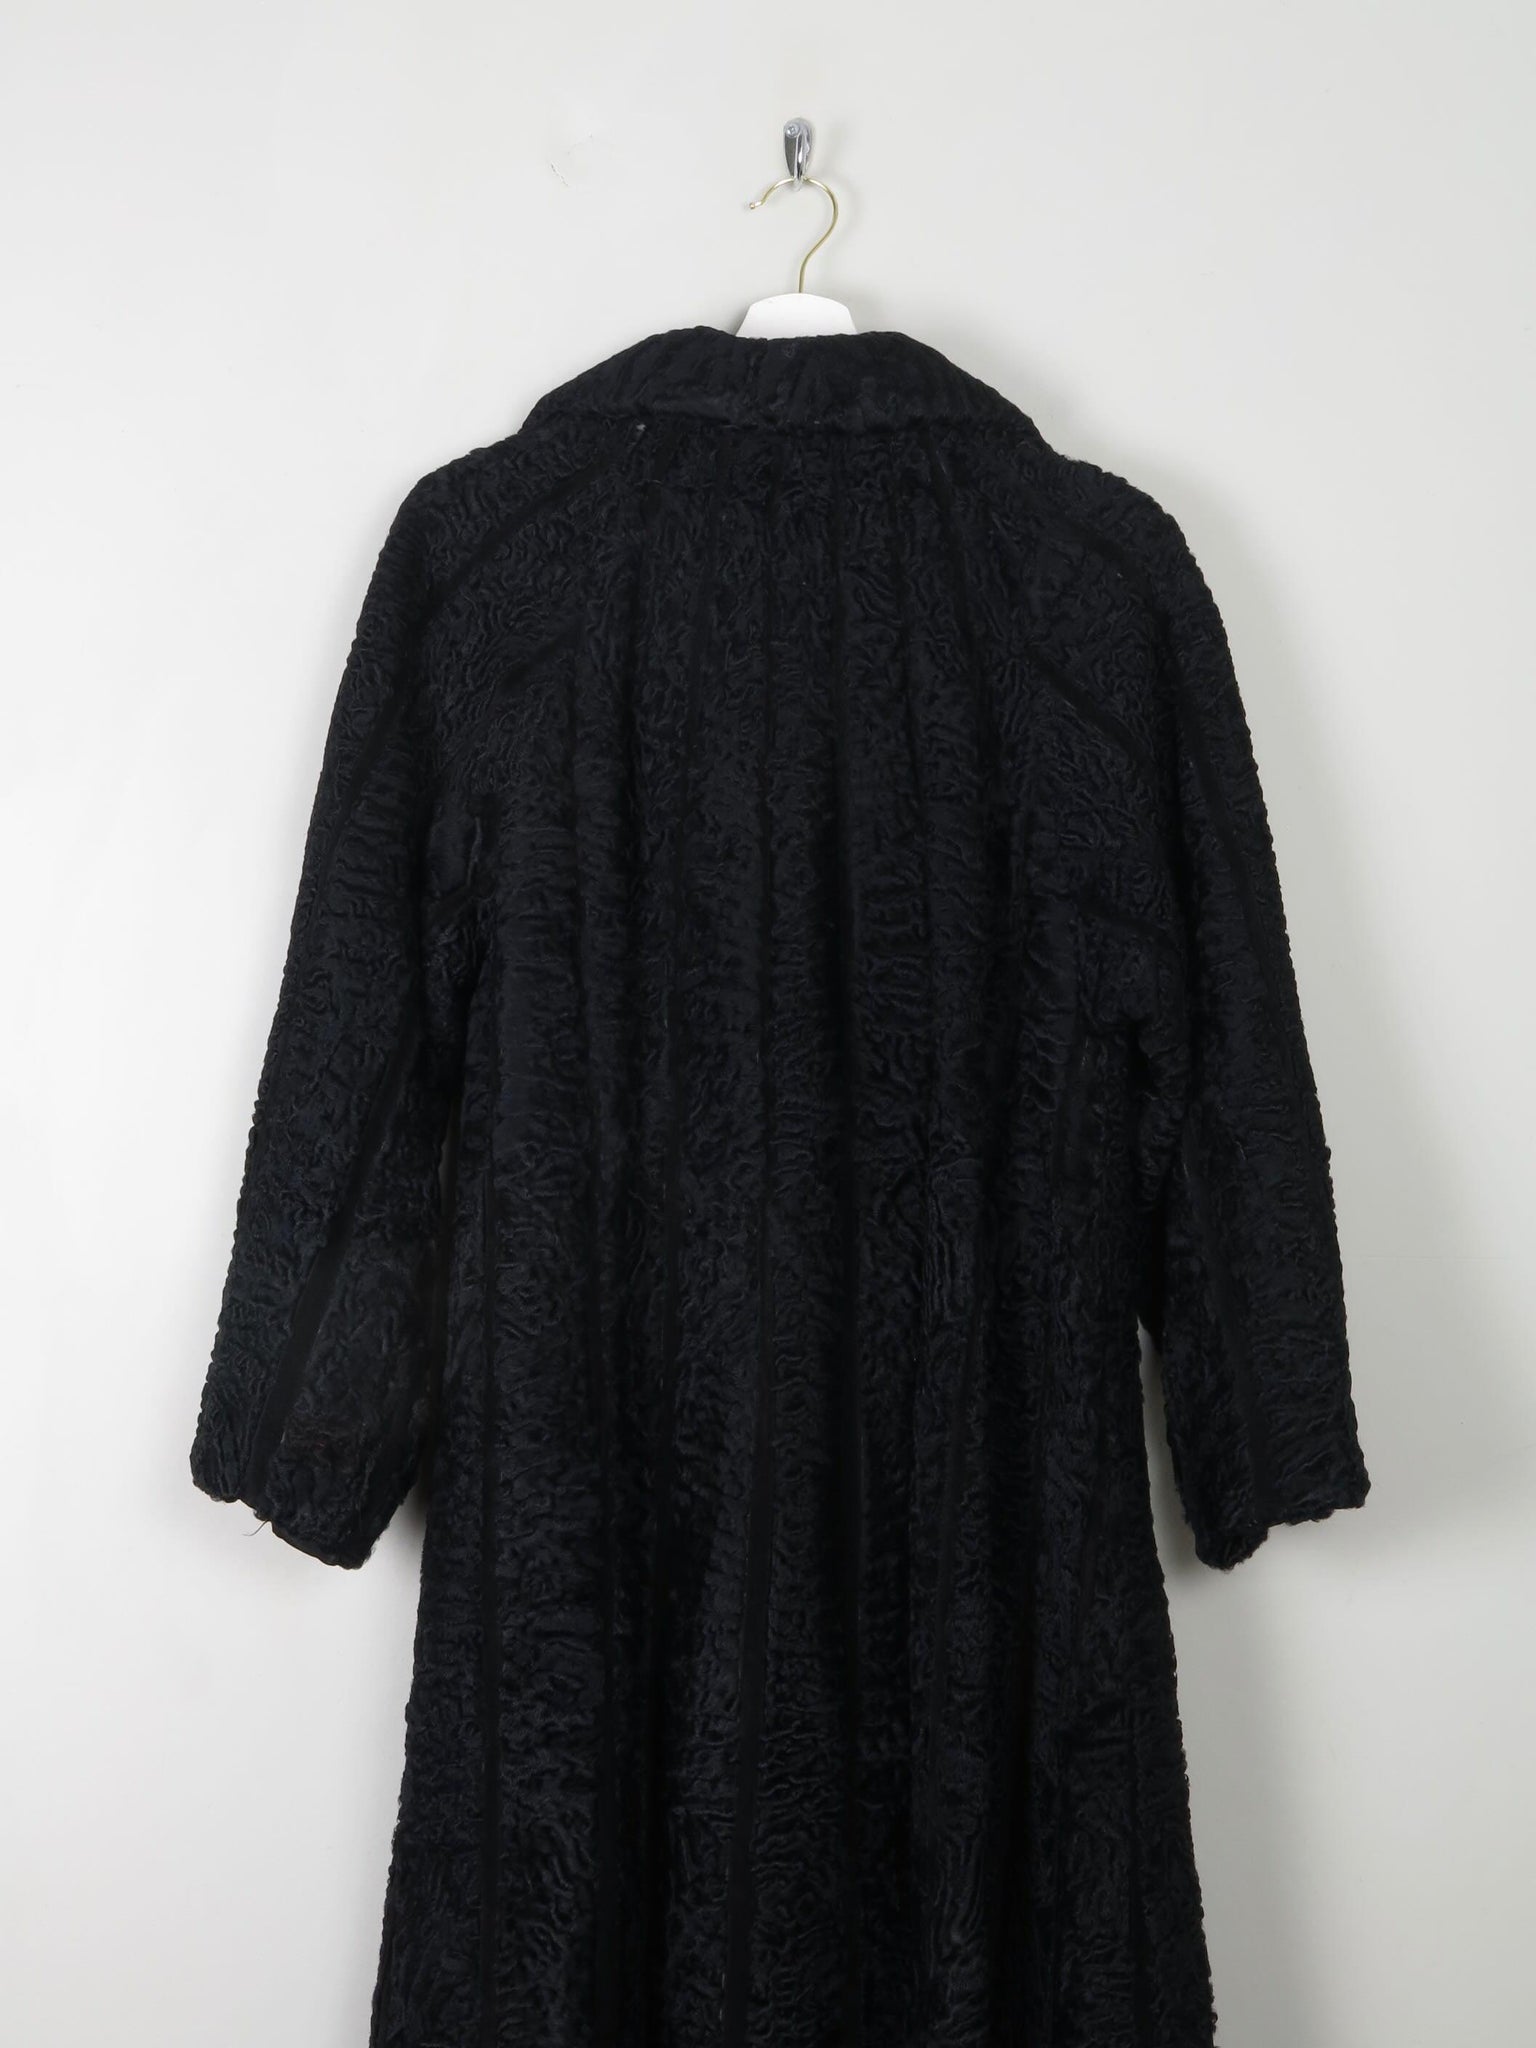 Women's 1950s Astrachan Black Swing Coat S/M - The Harlequin